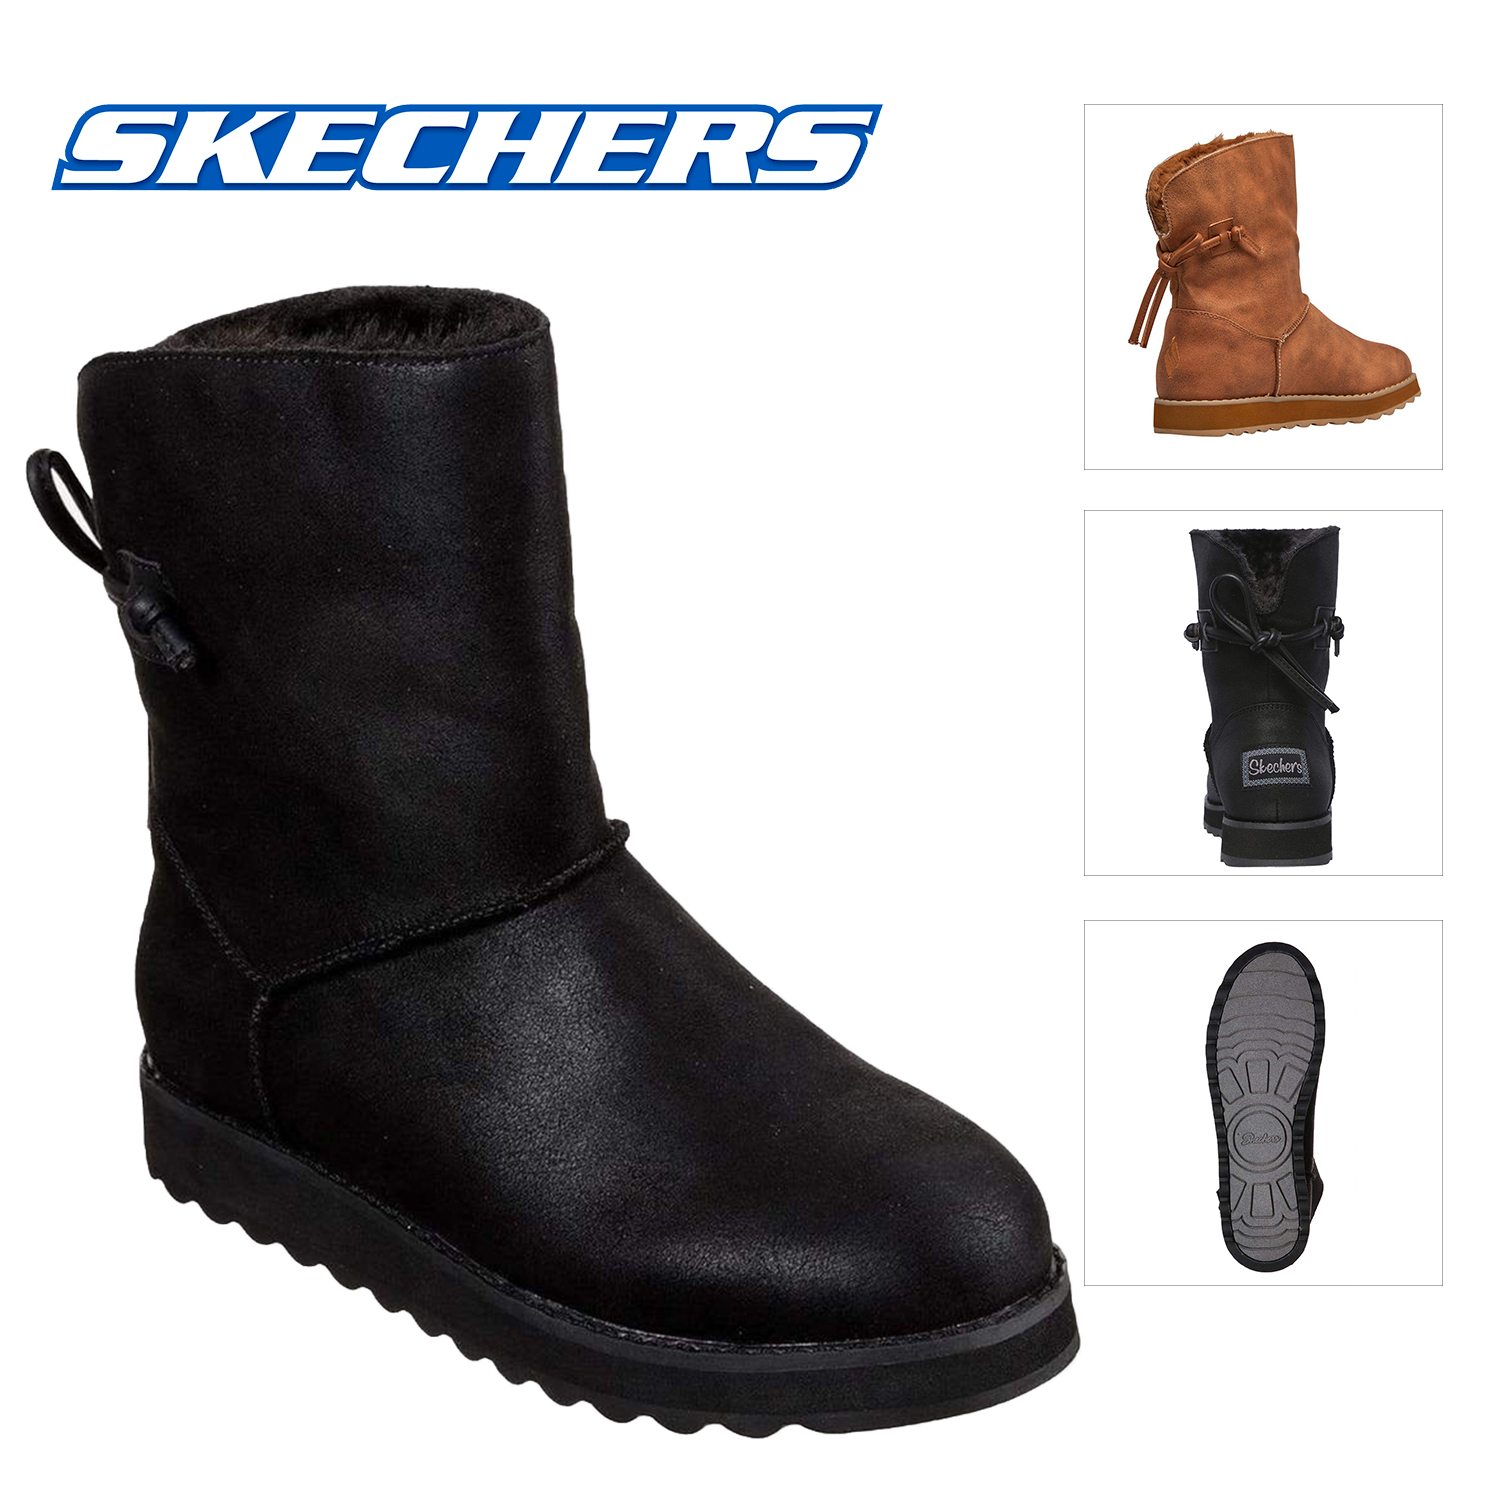 sketcher keepsake boots